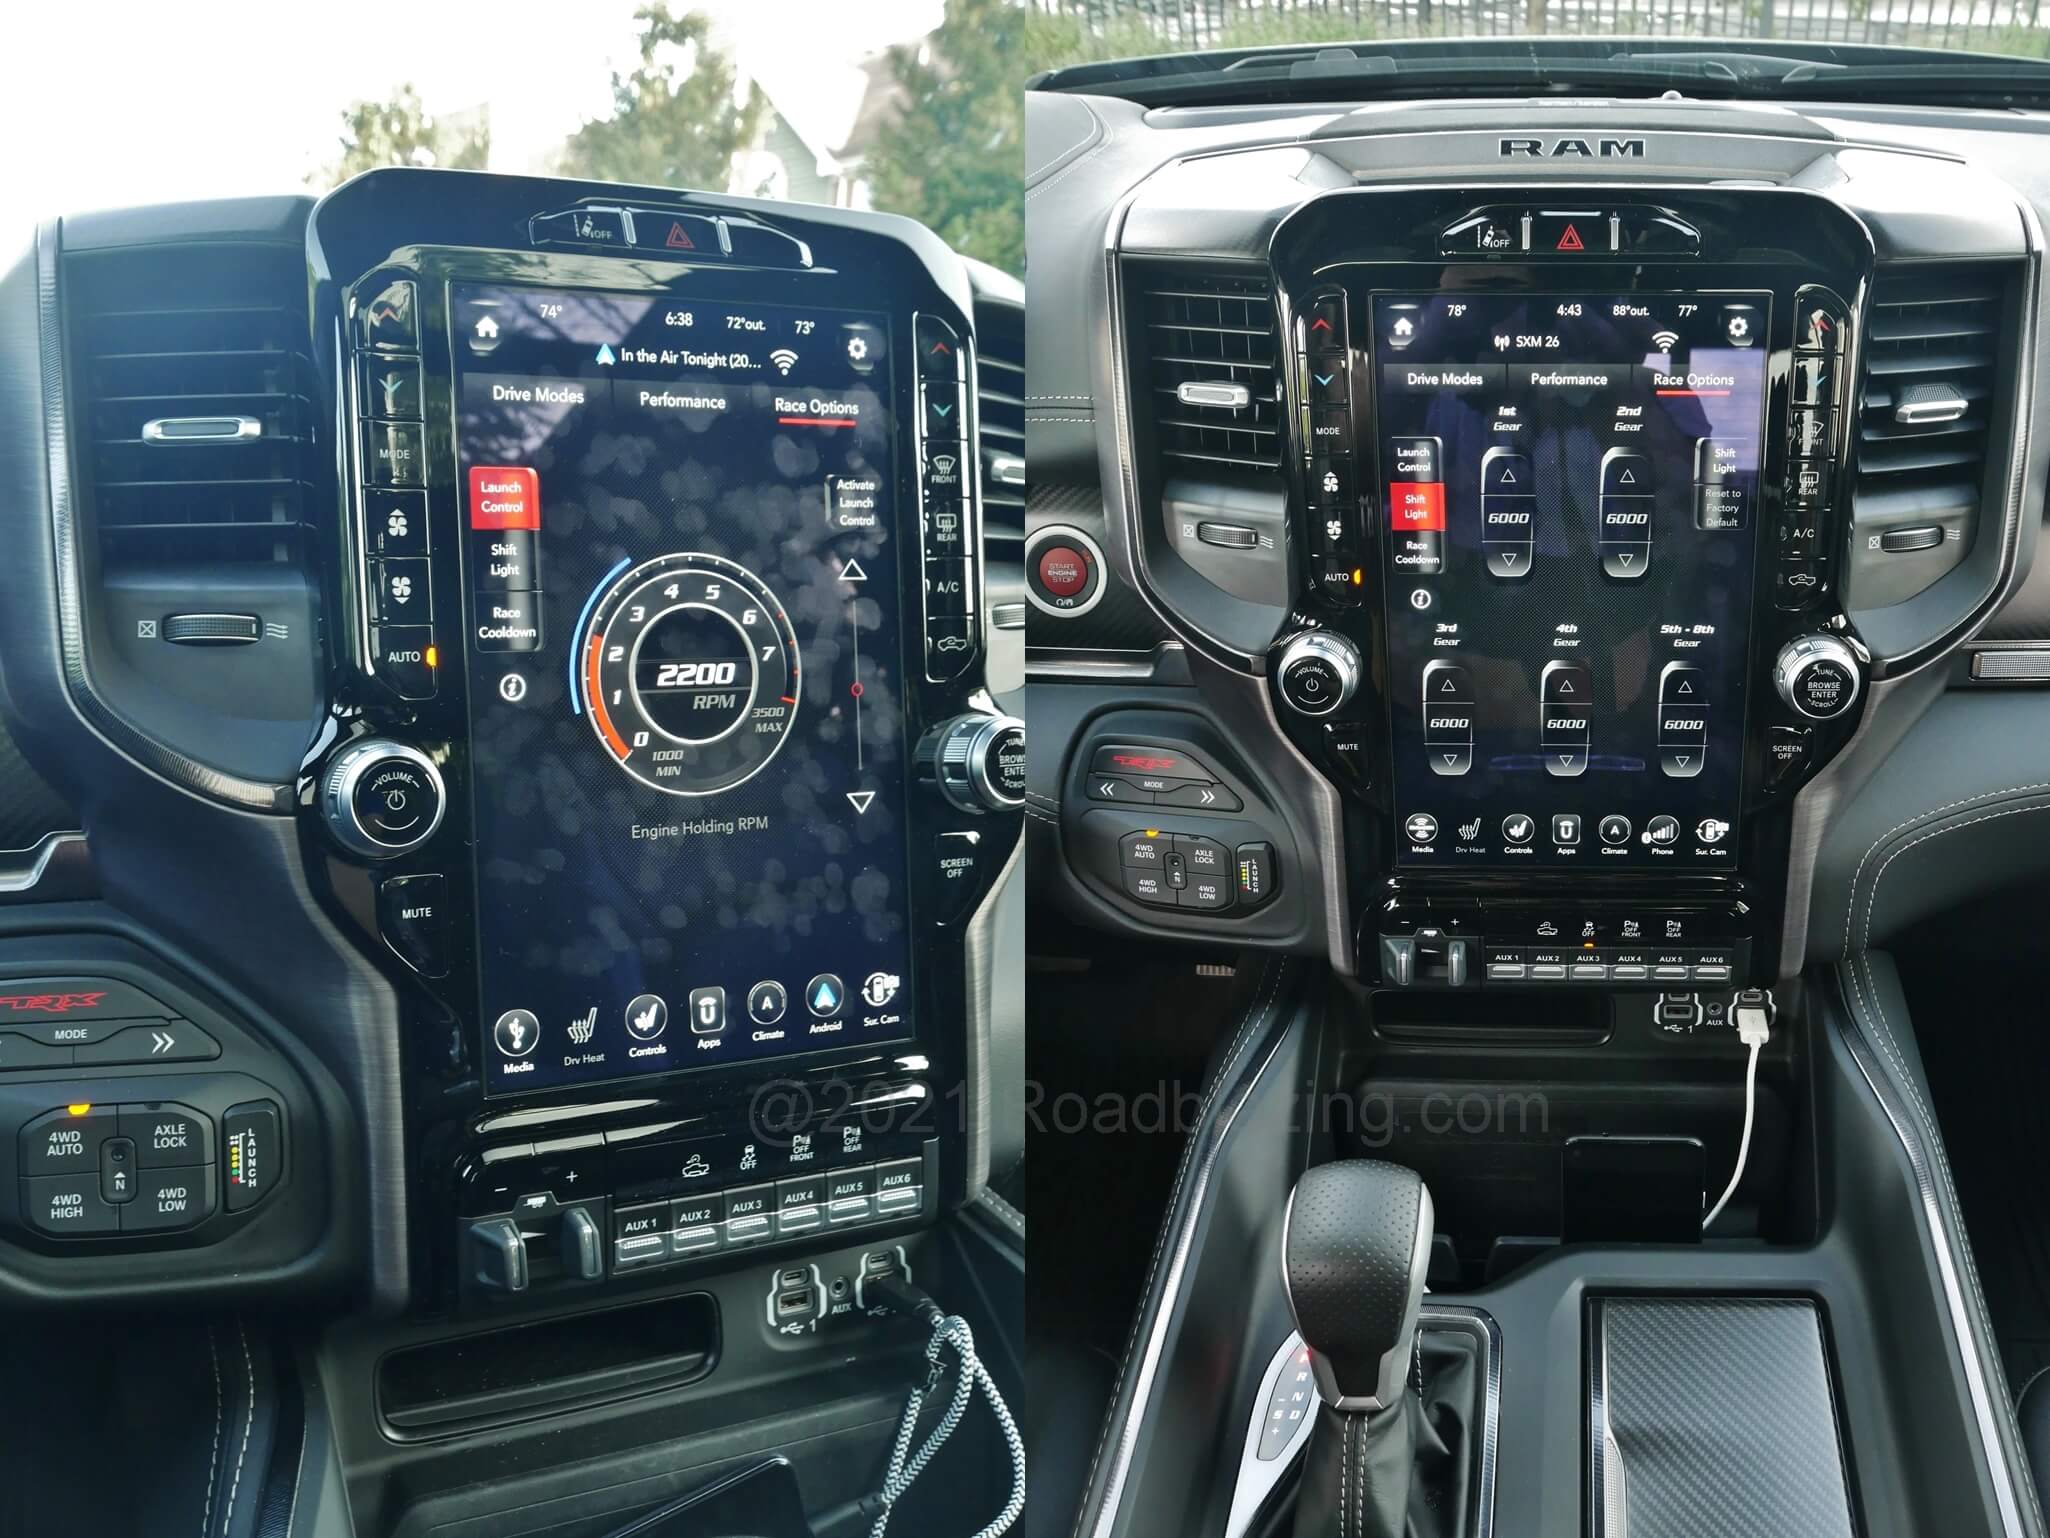 2021 RAM 1500 TRX Crew Cab 4x4: launch control via Performance Pages